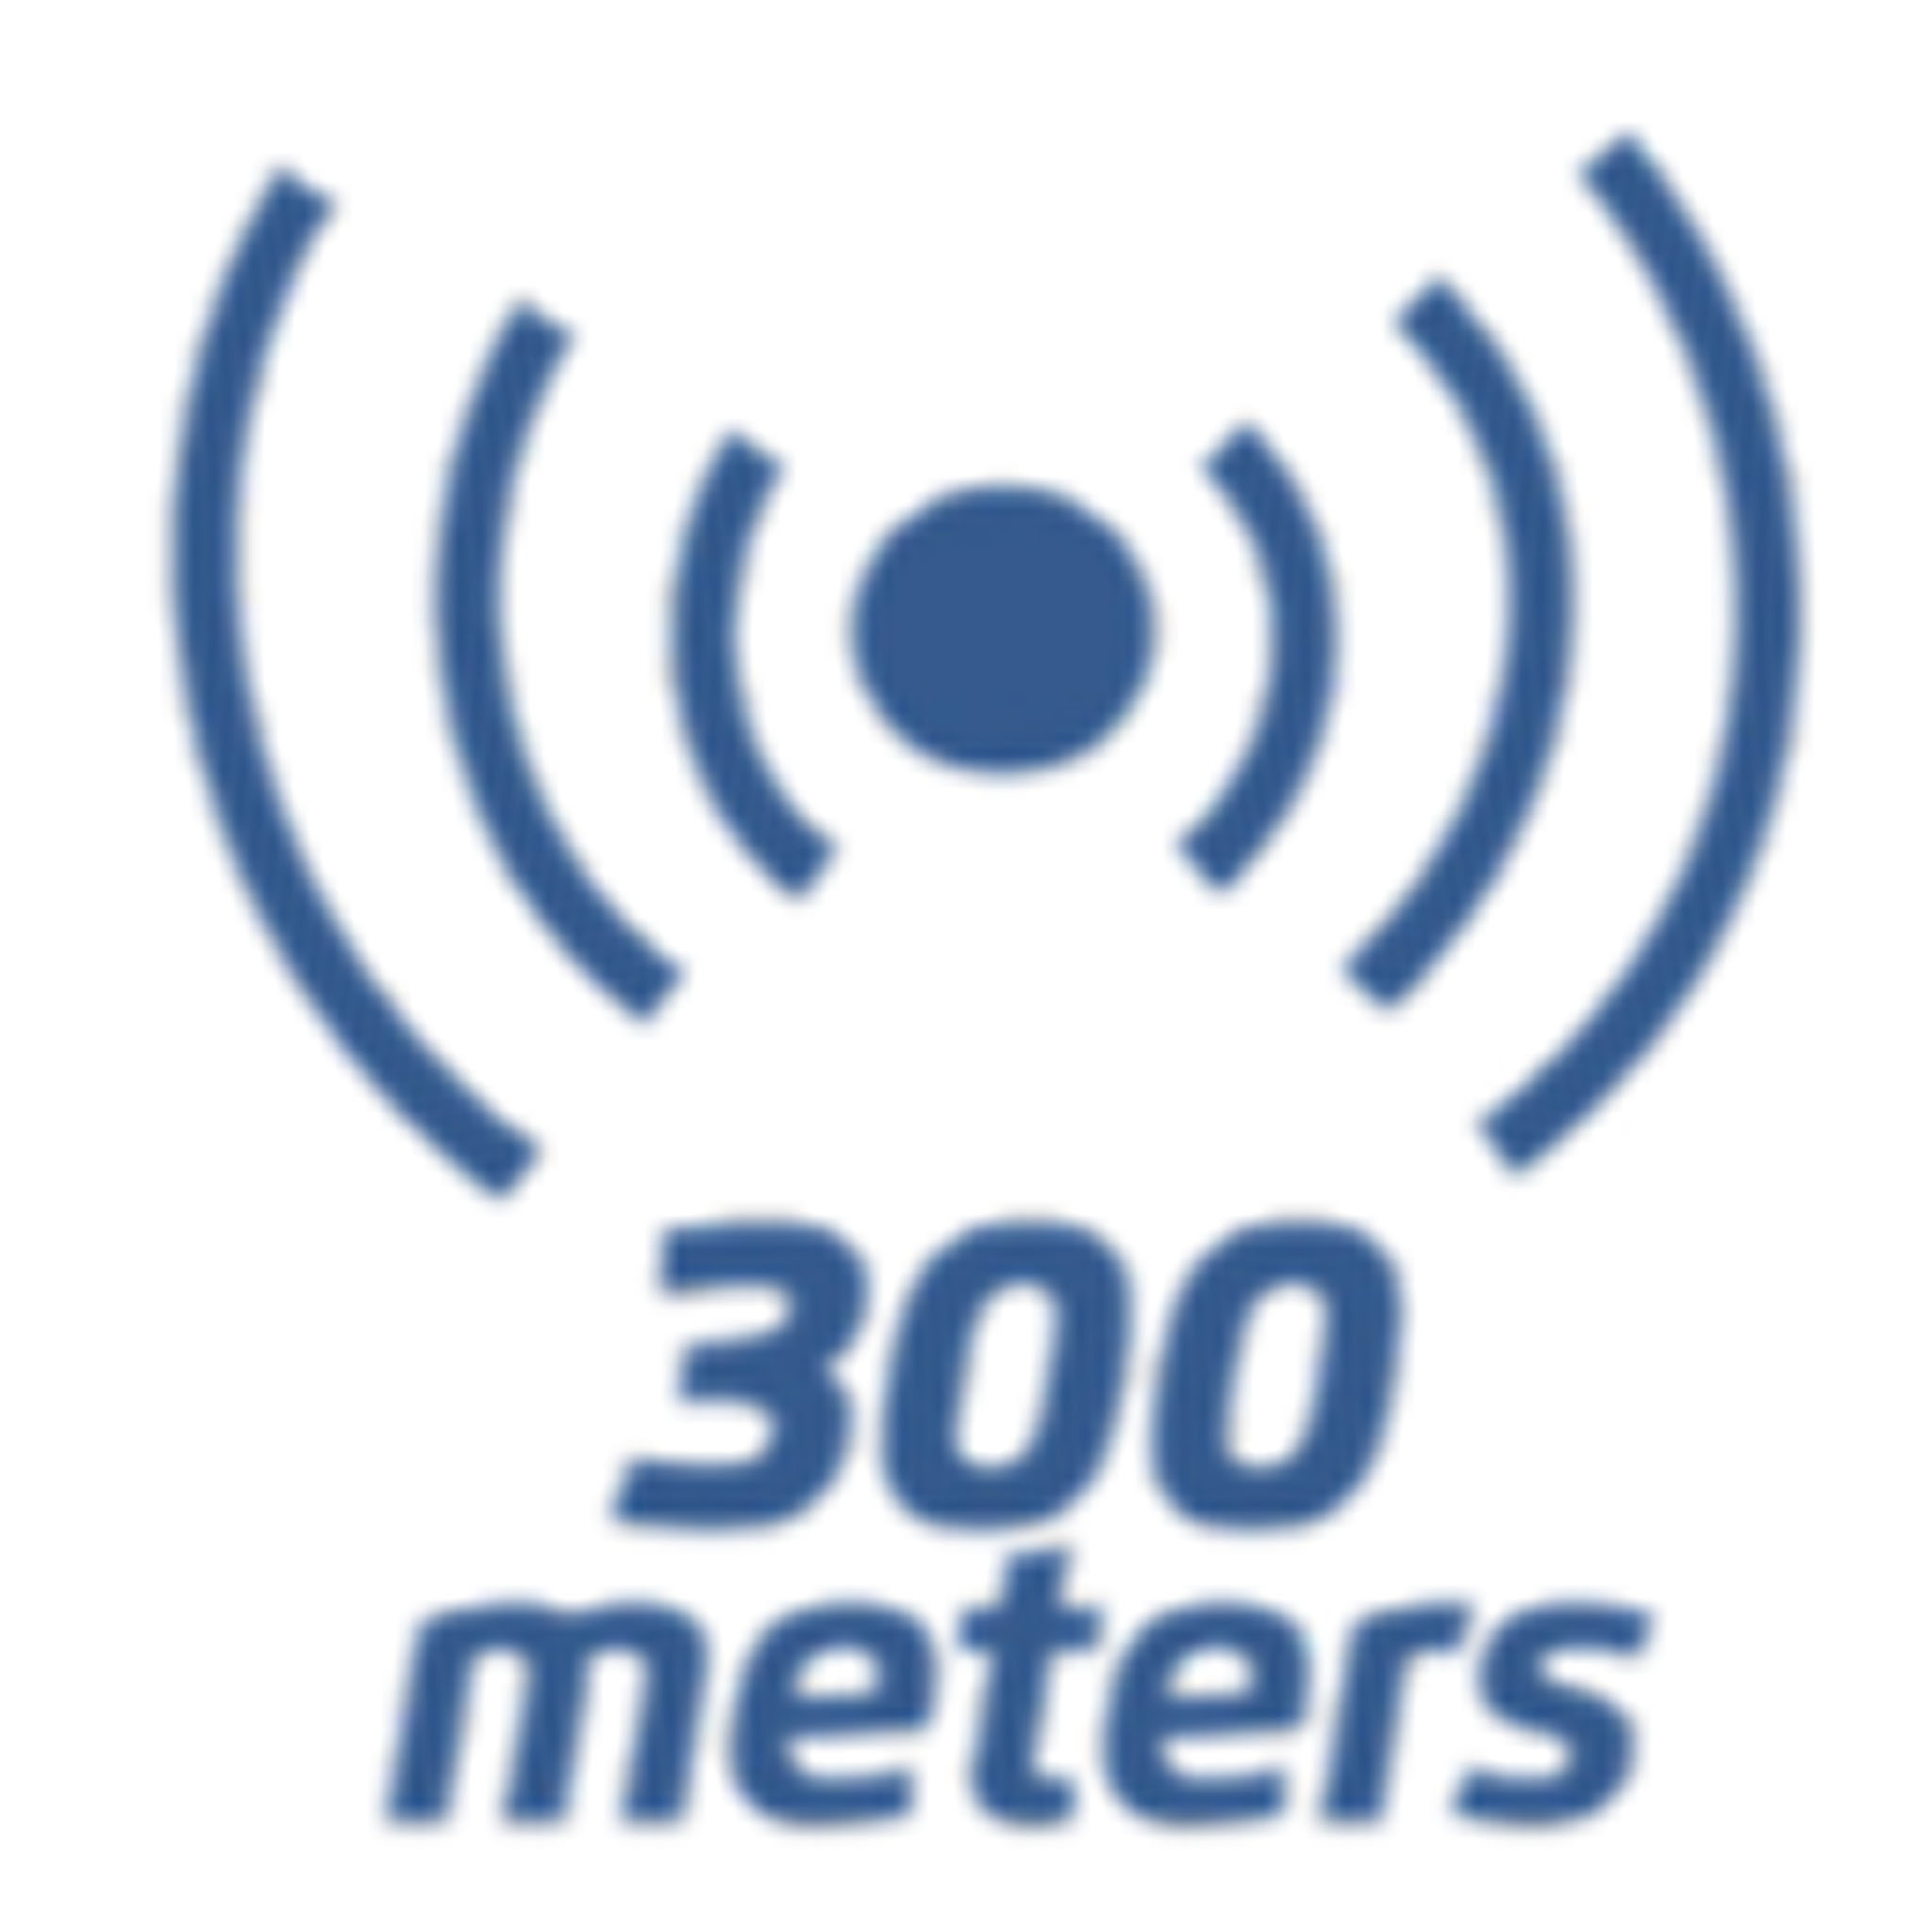 Up to 300-meter coverage range